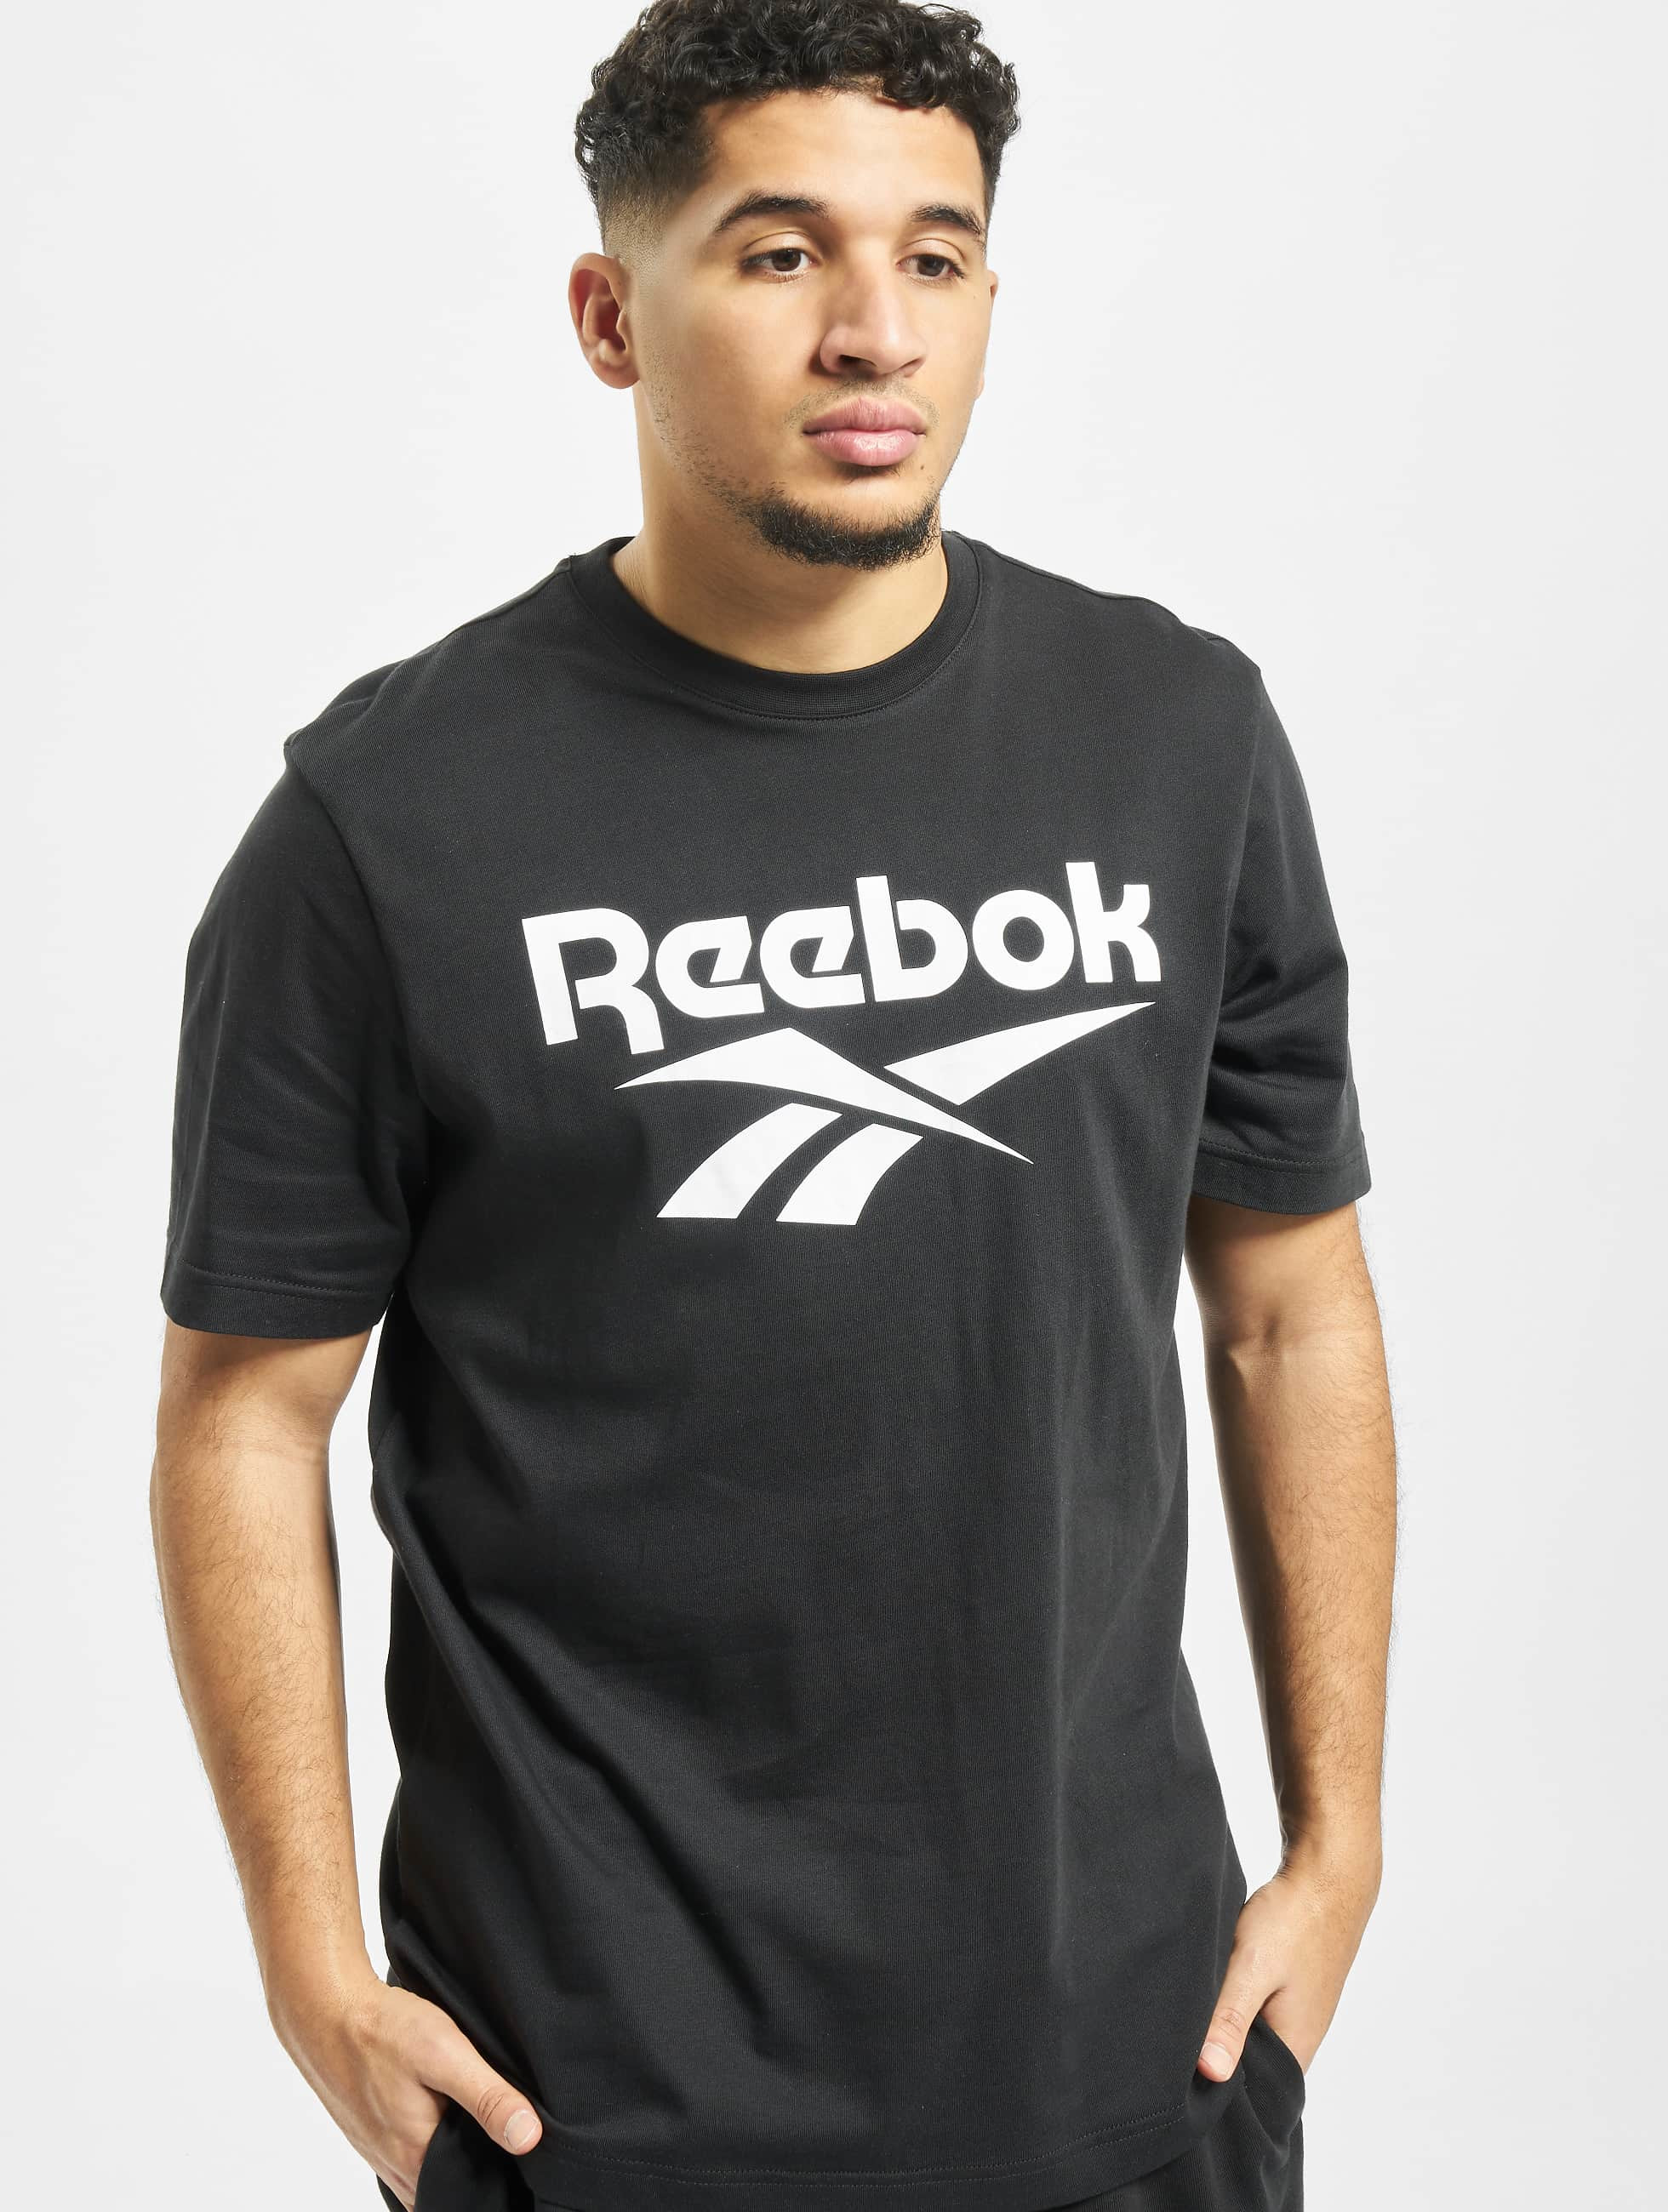 reebok and t shirt